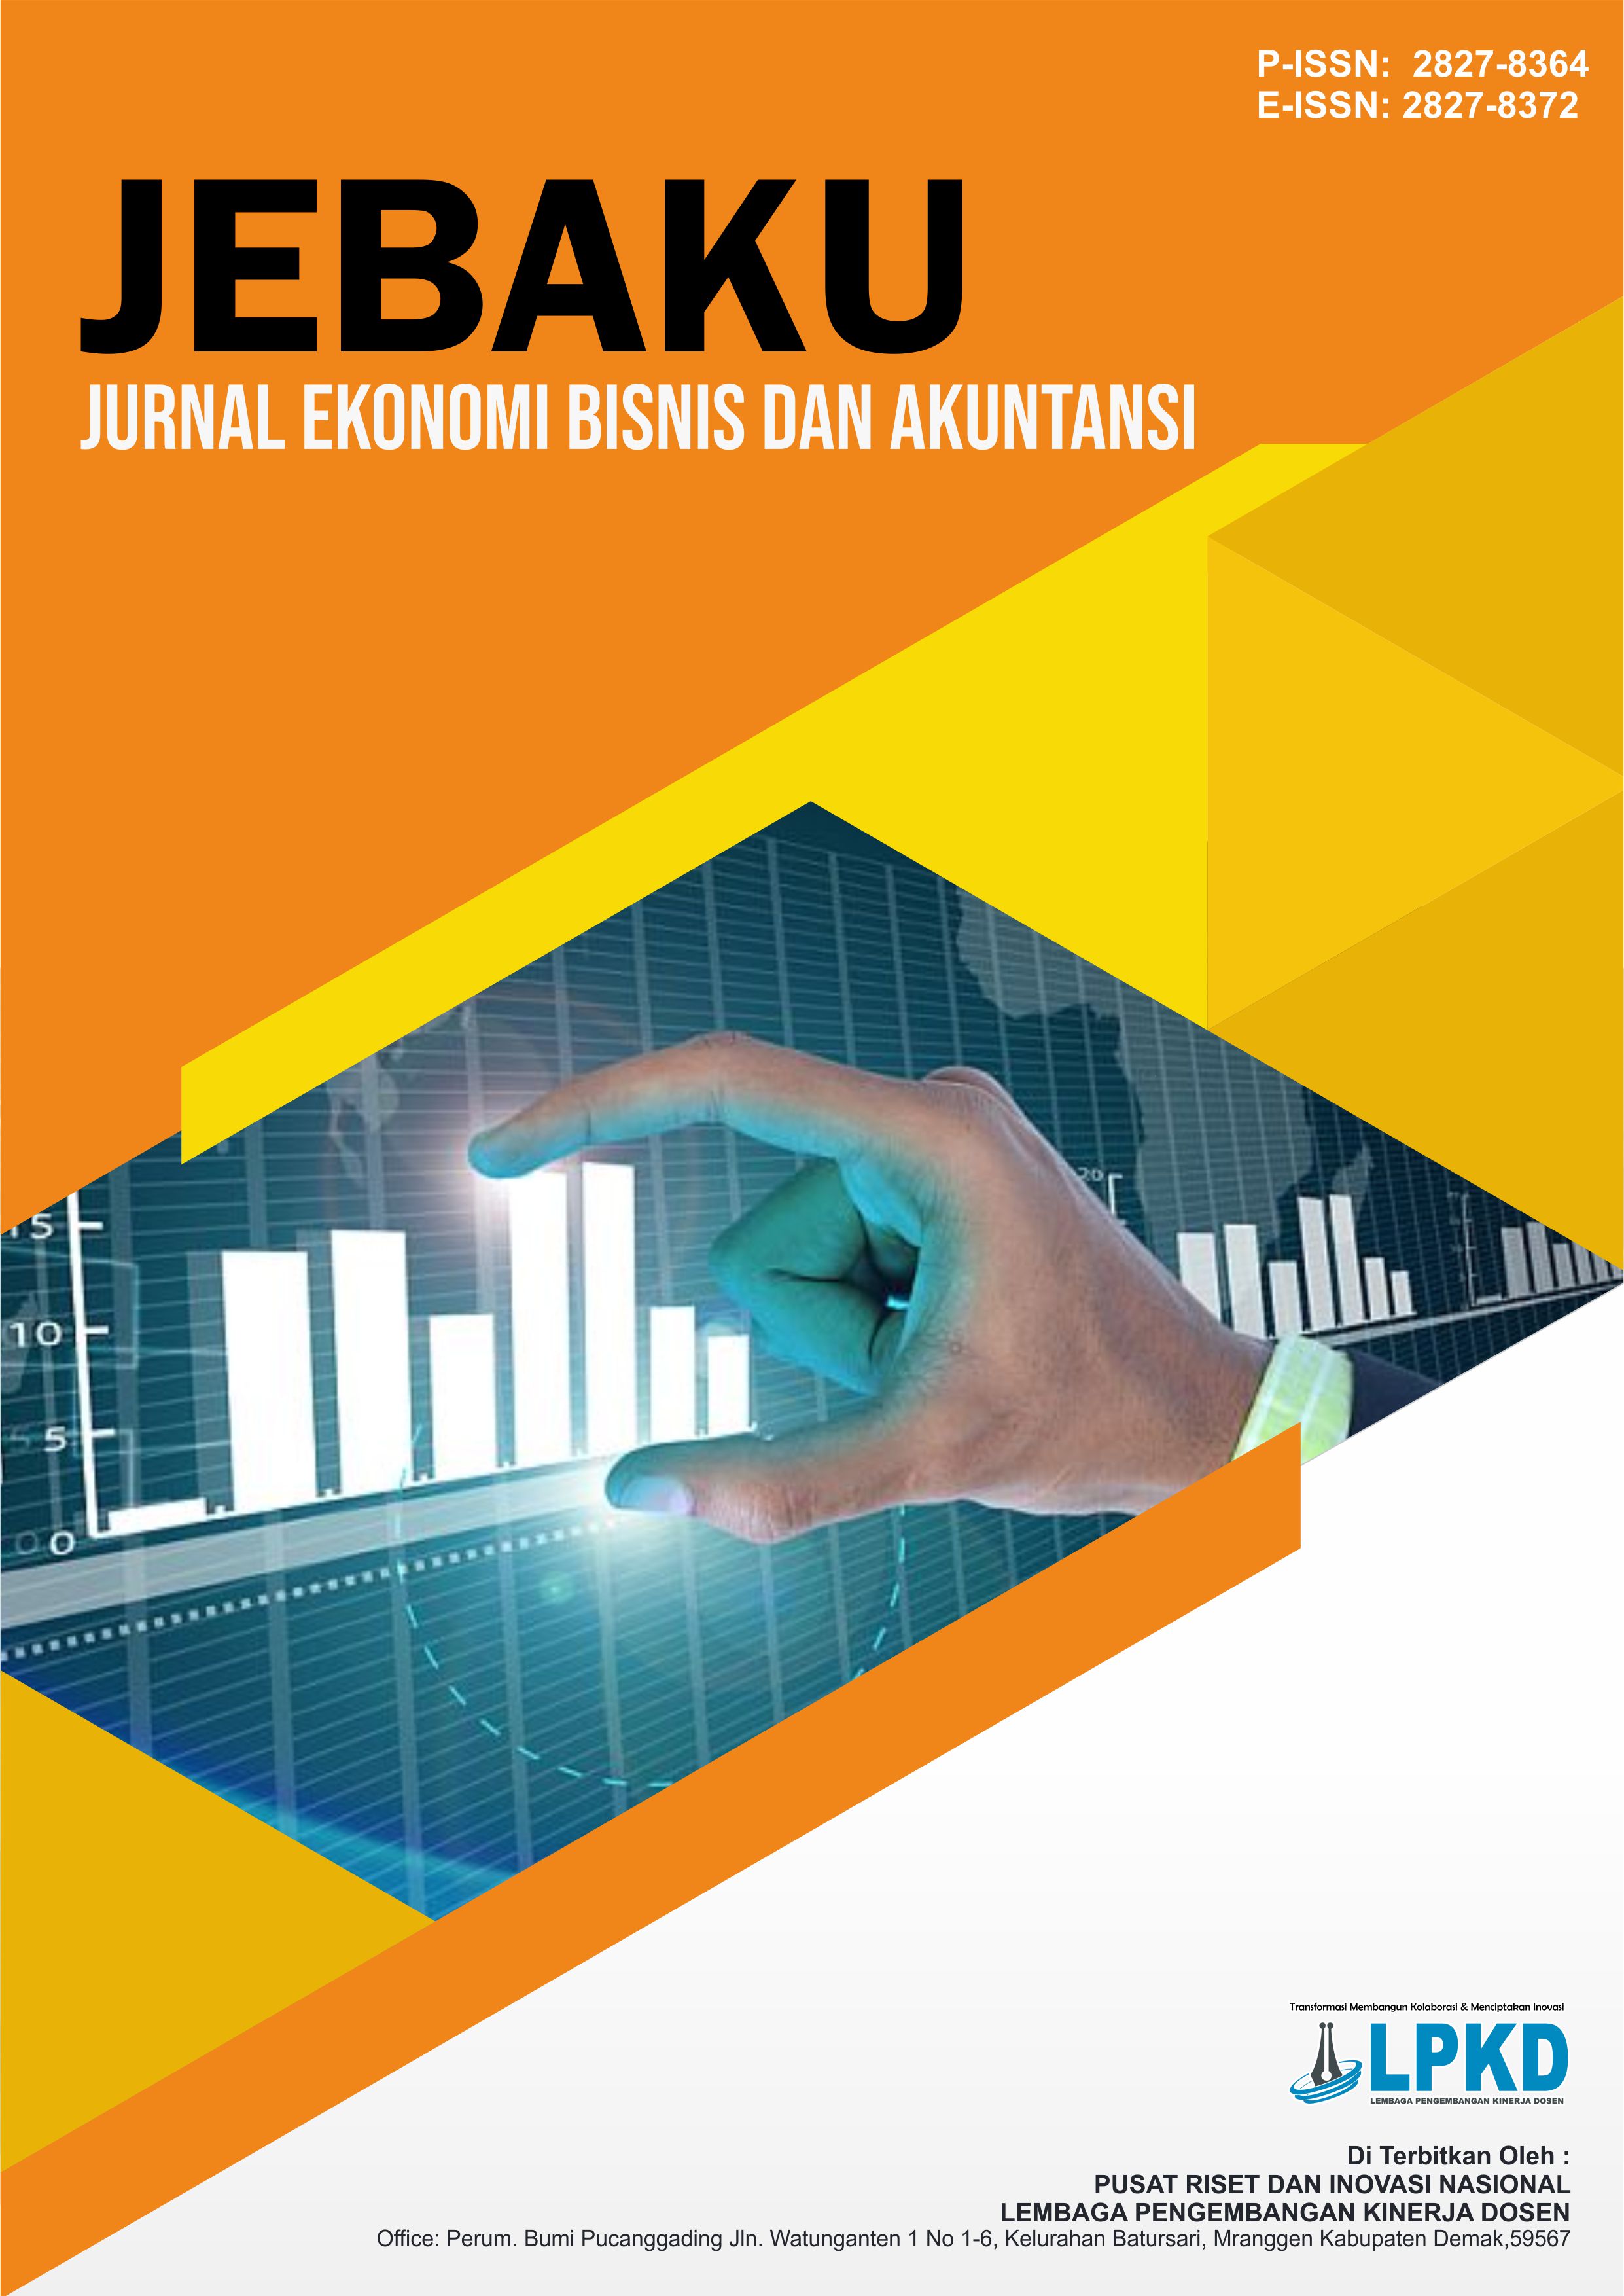 					View Vol. 1 No. 2 (2021): Agustus : Jurnal Ekonomi Bisnis dan Akuntansi (JEBAKU)
				